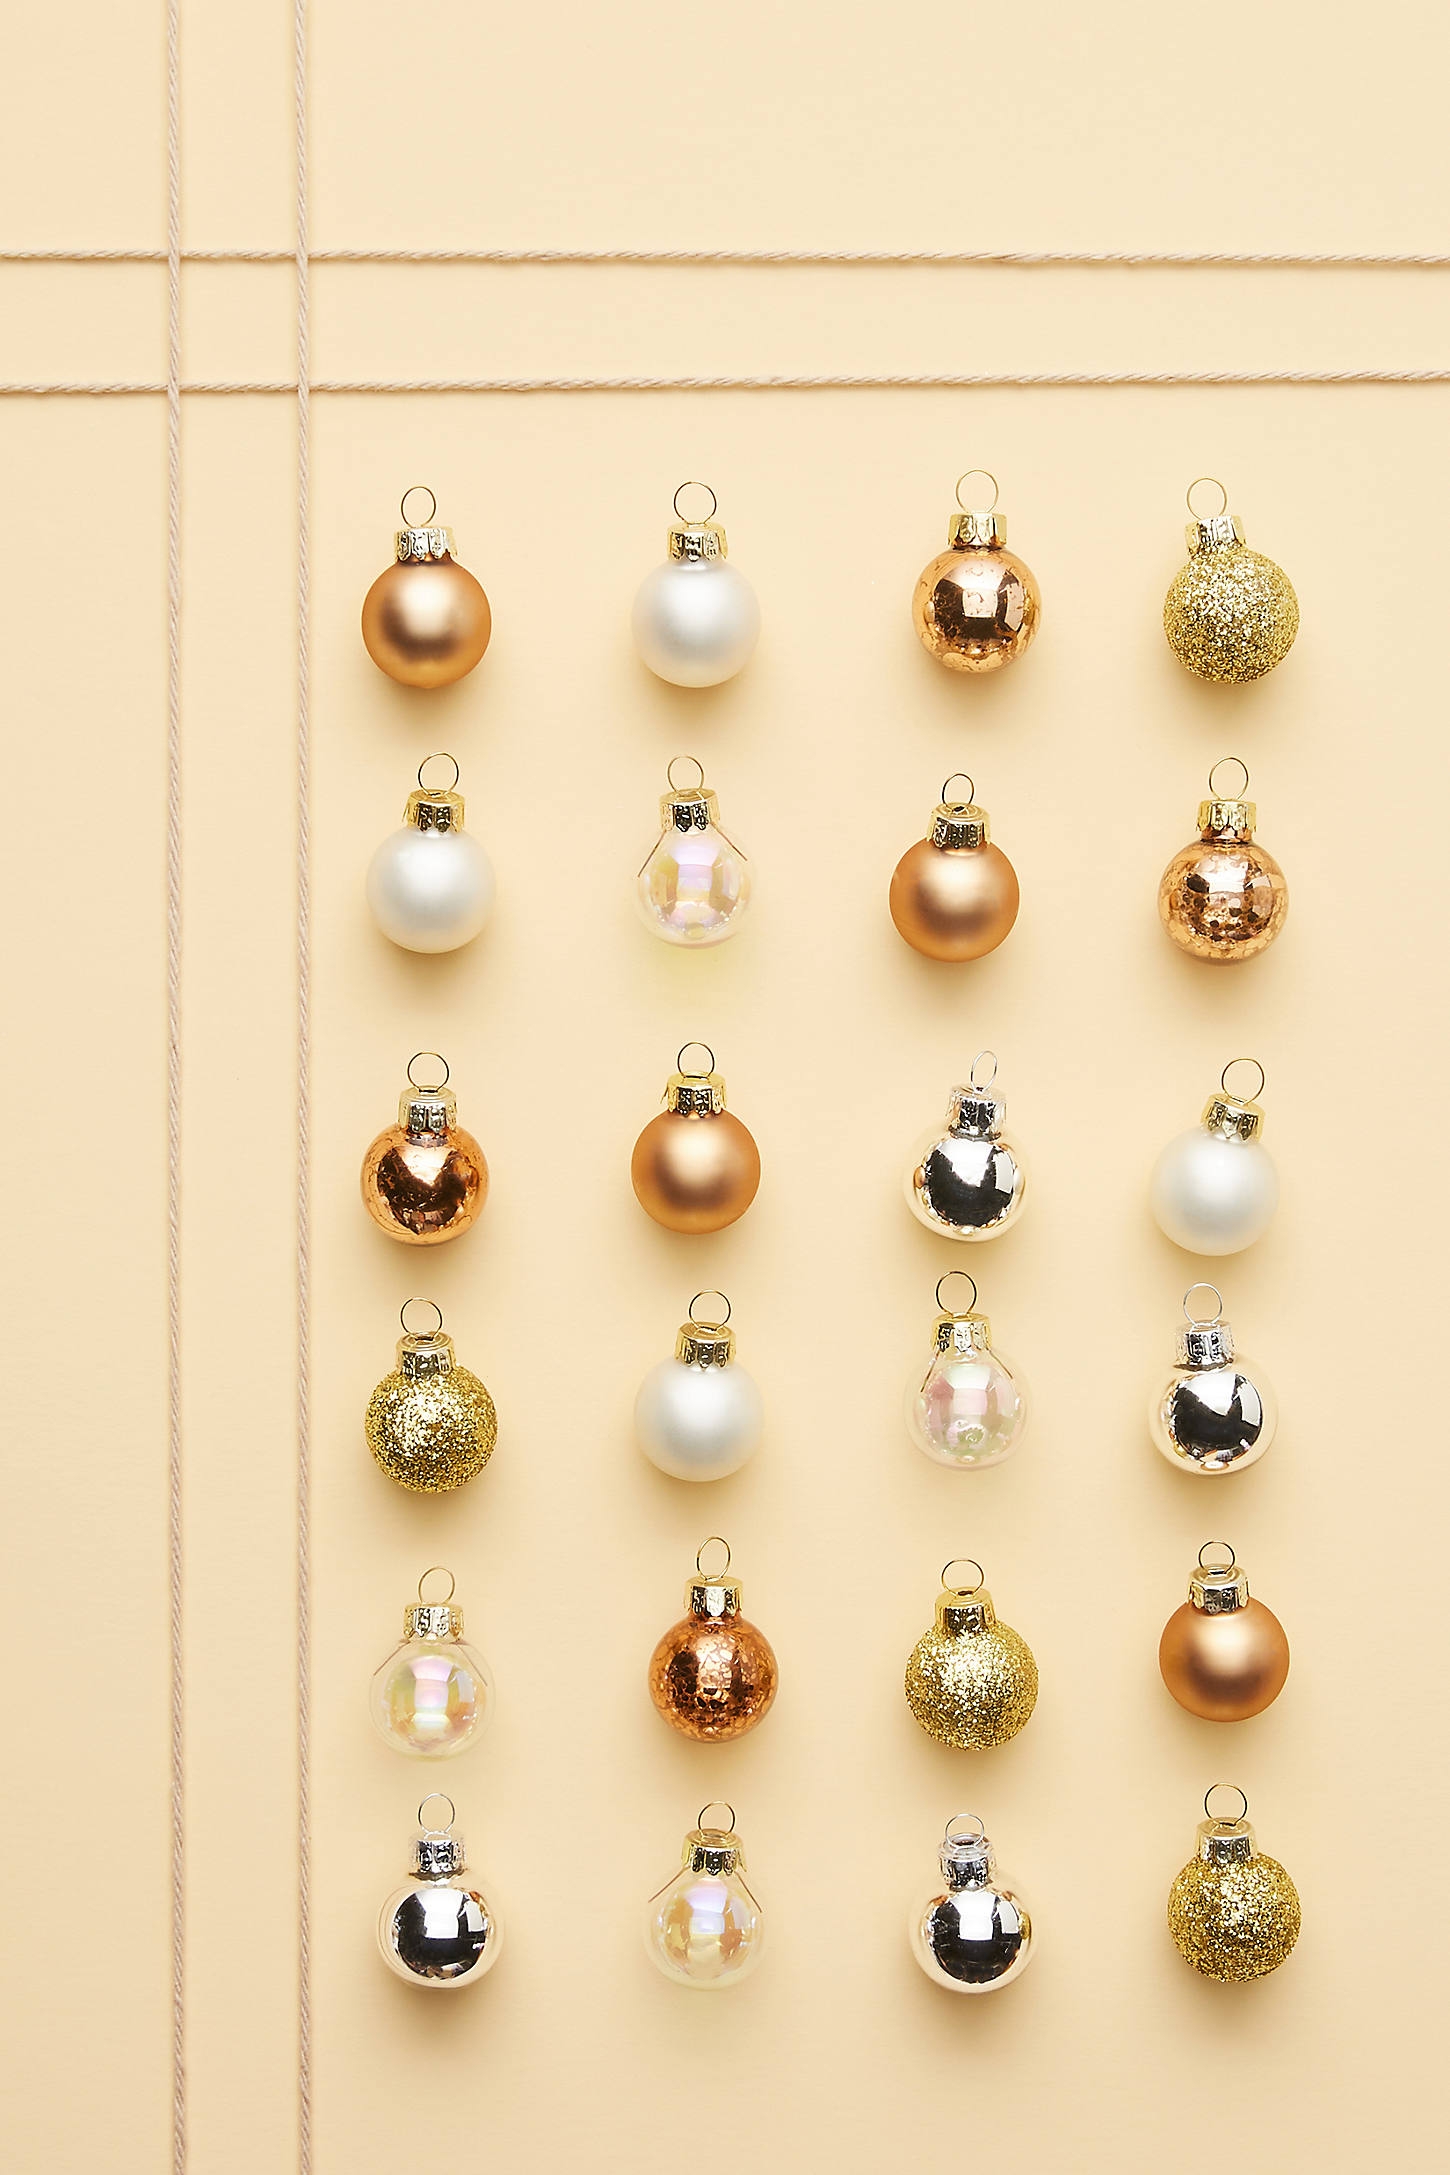 Copper Mini Ornaments, Set of 24 - Image 0